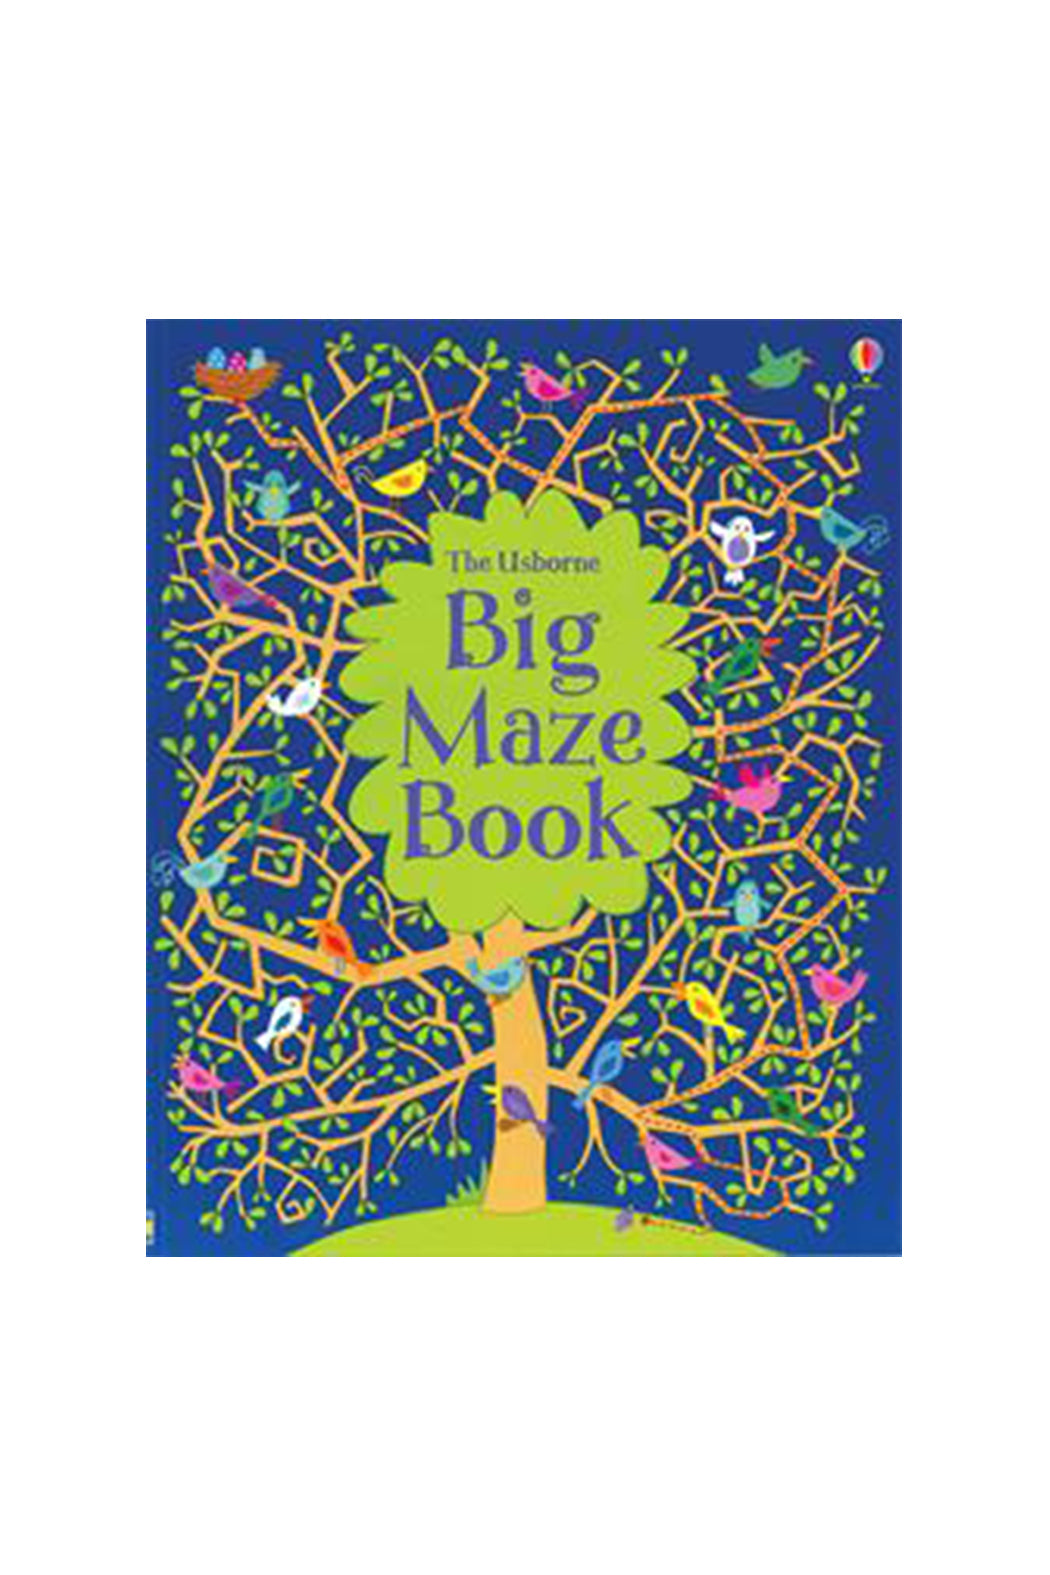 Usborne Big Maze Book